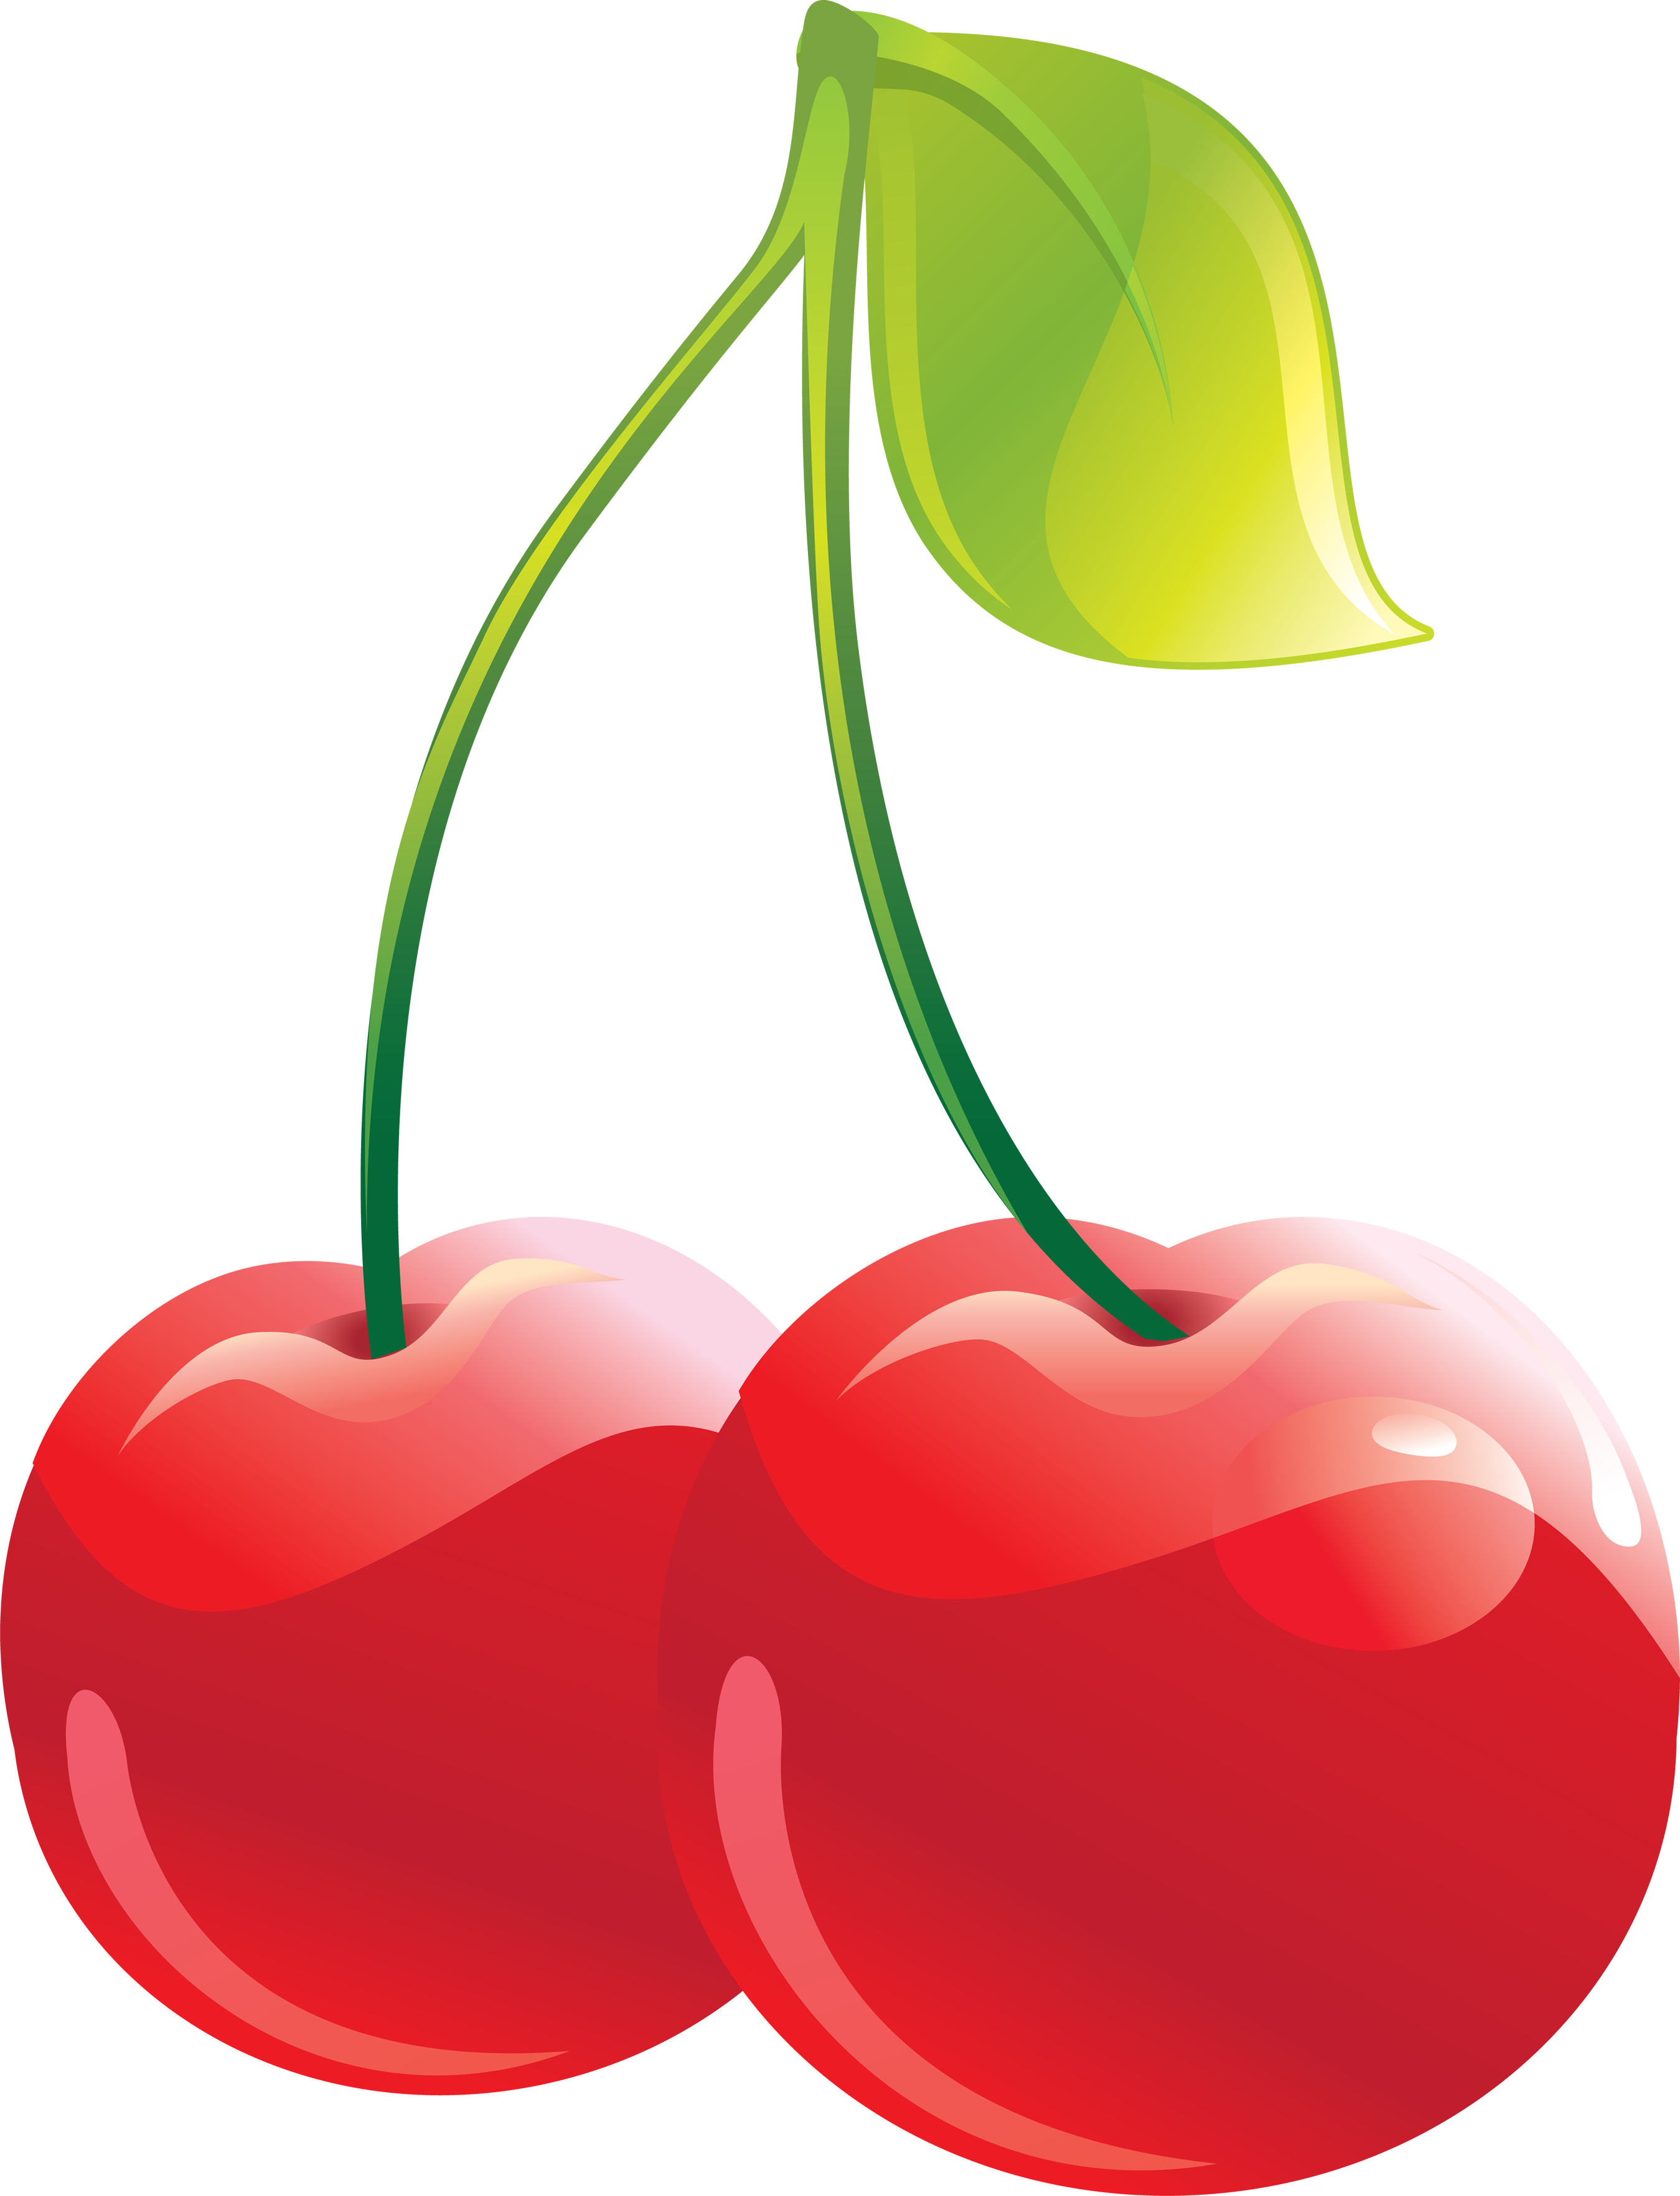 One Cherry Clip Art Download  - Cherries Clipart